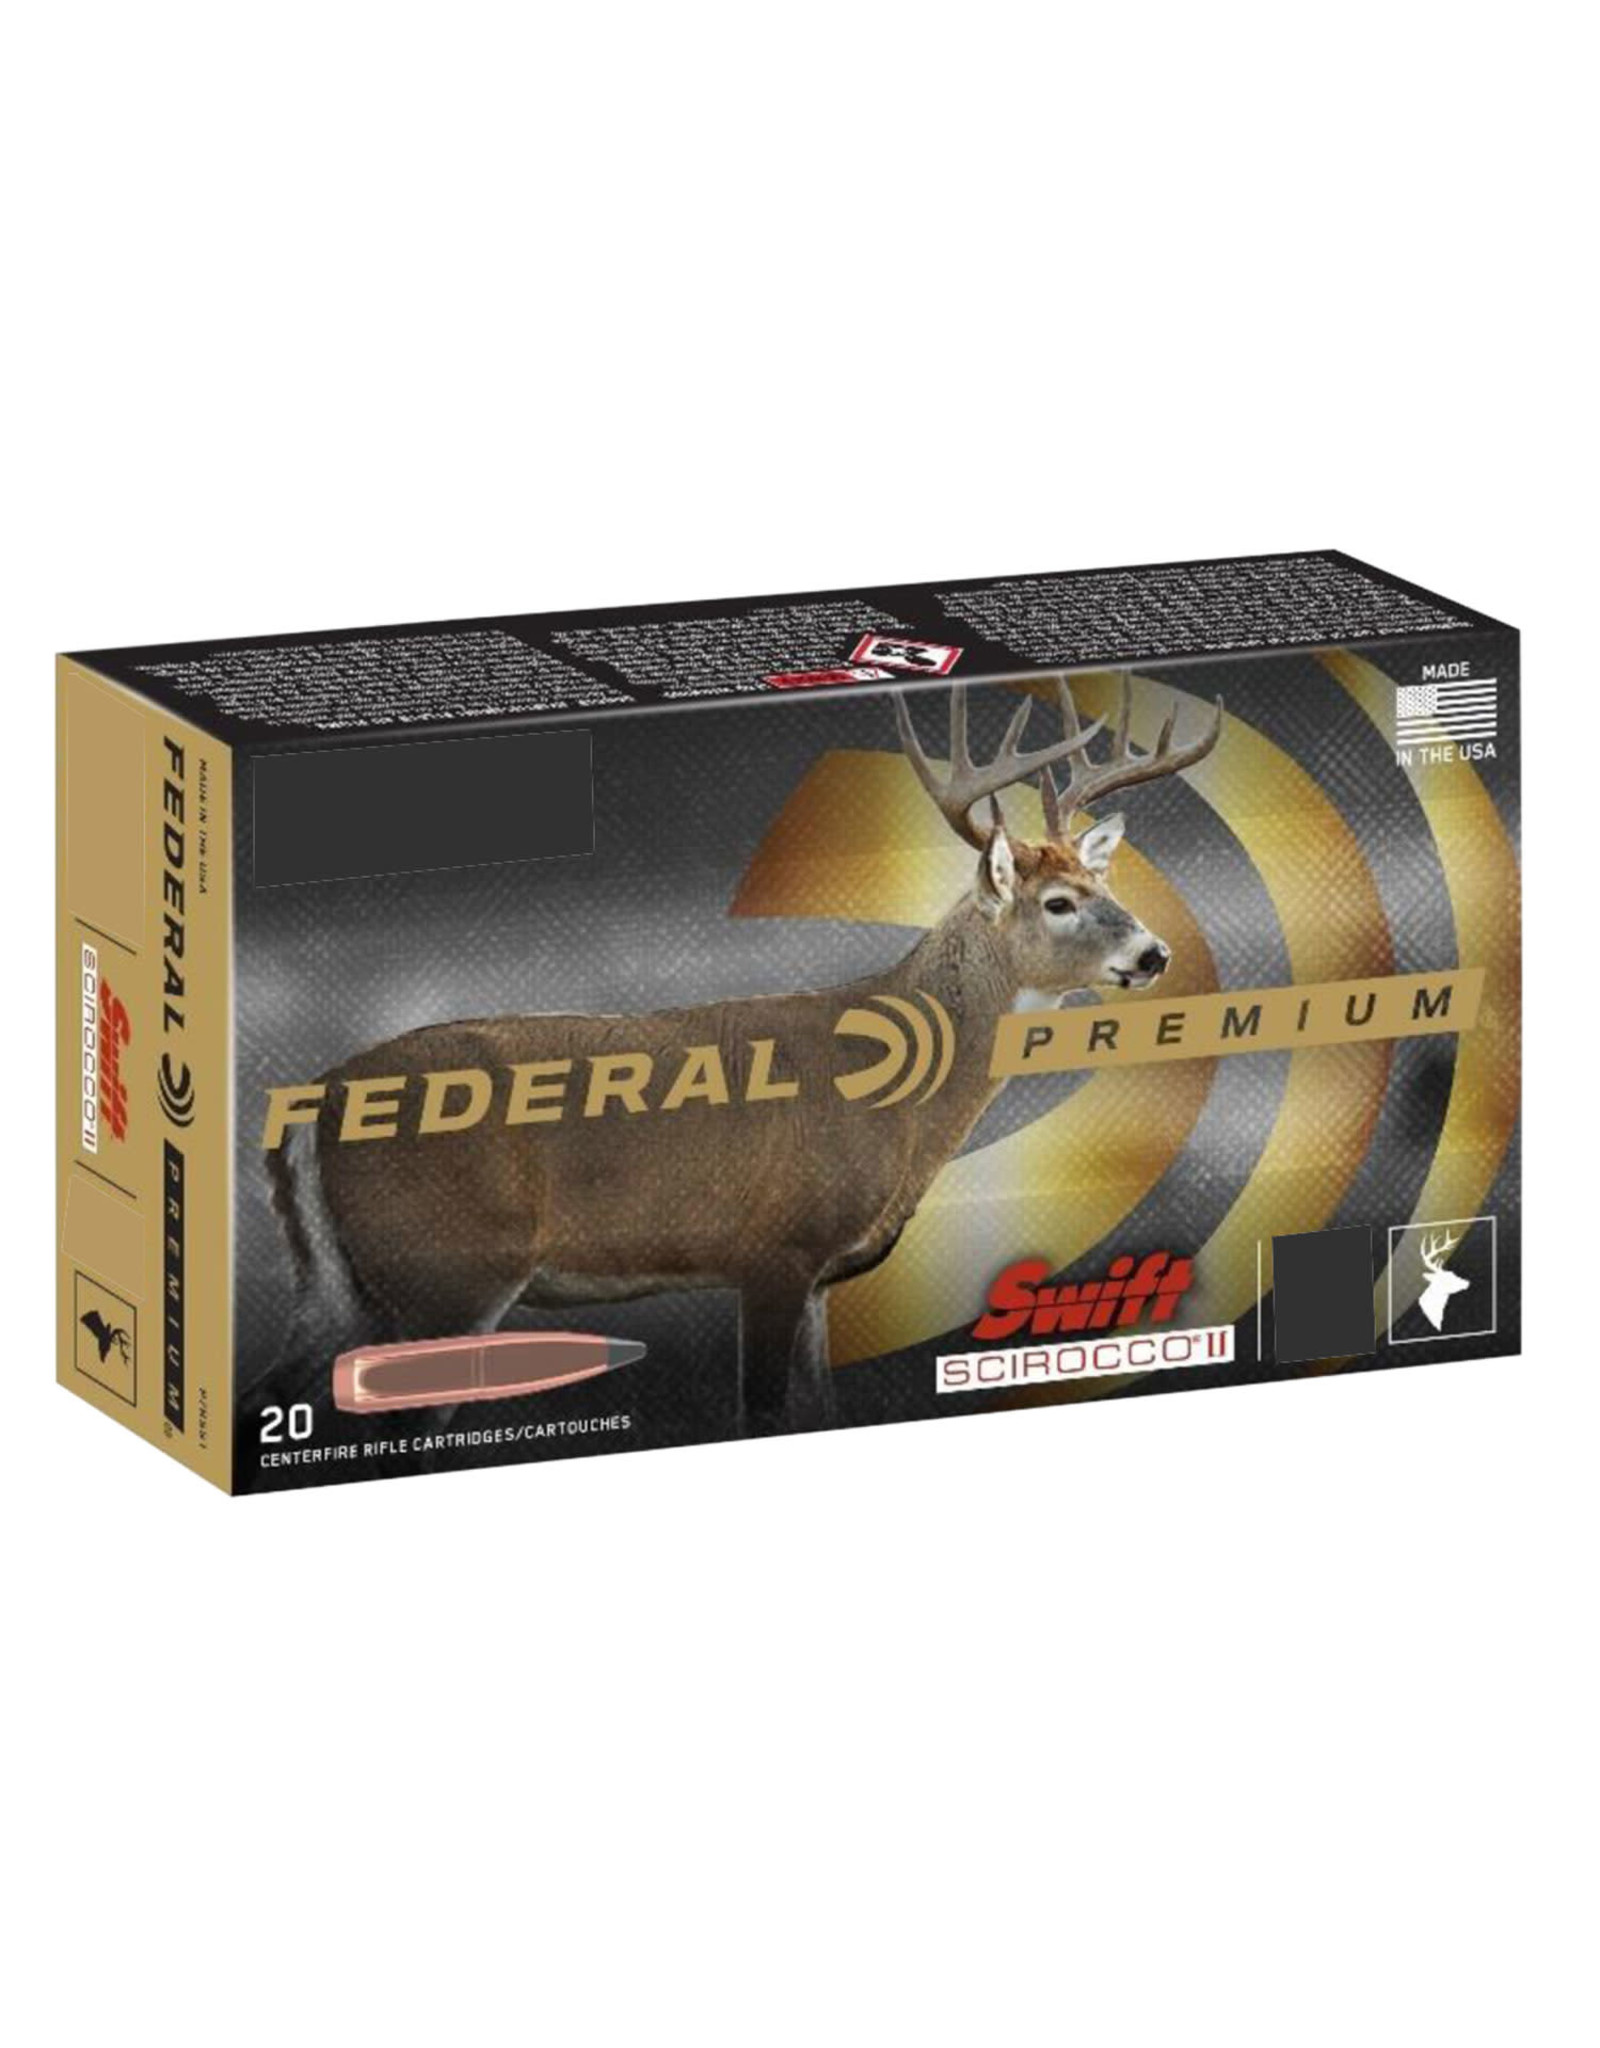 Federal Federal Premium 6.5 Creedmoor 130 Gr Swift Scirocco II - 20 Count